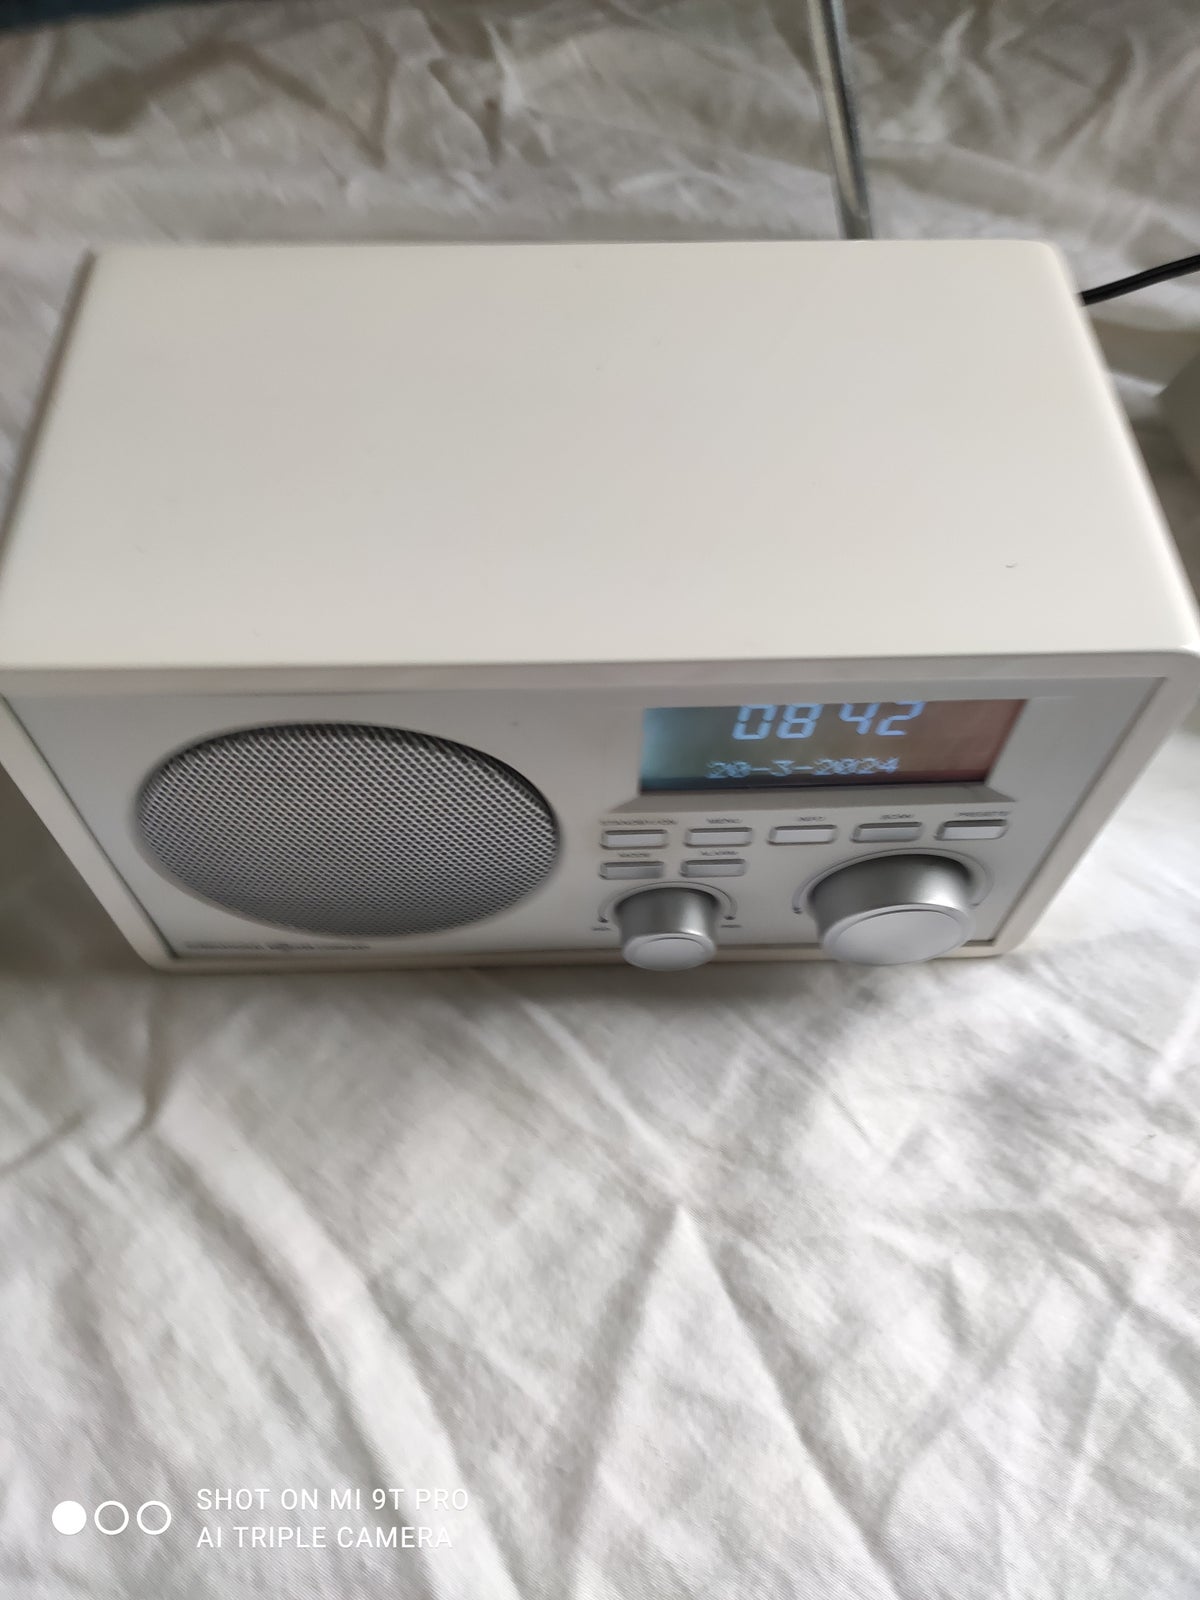 DAB-radio, Andet, Ikr. 1440 dab+ radio